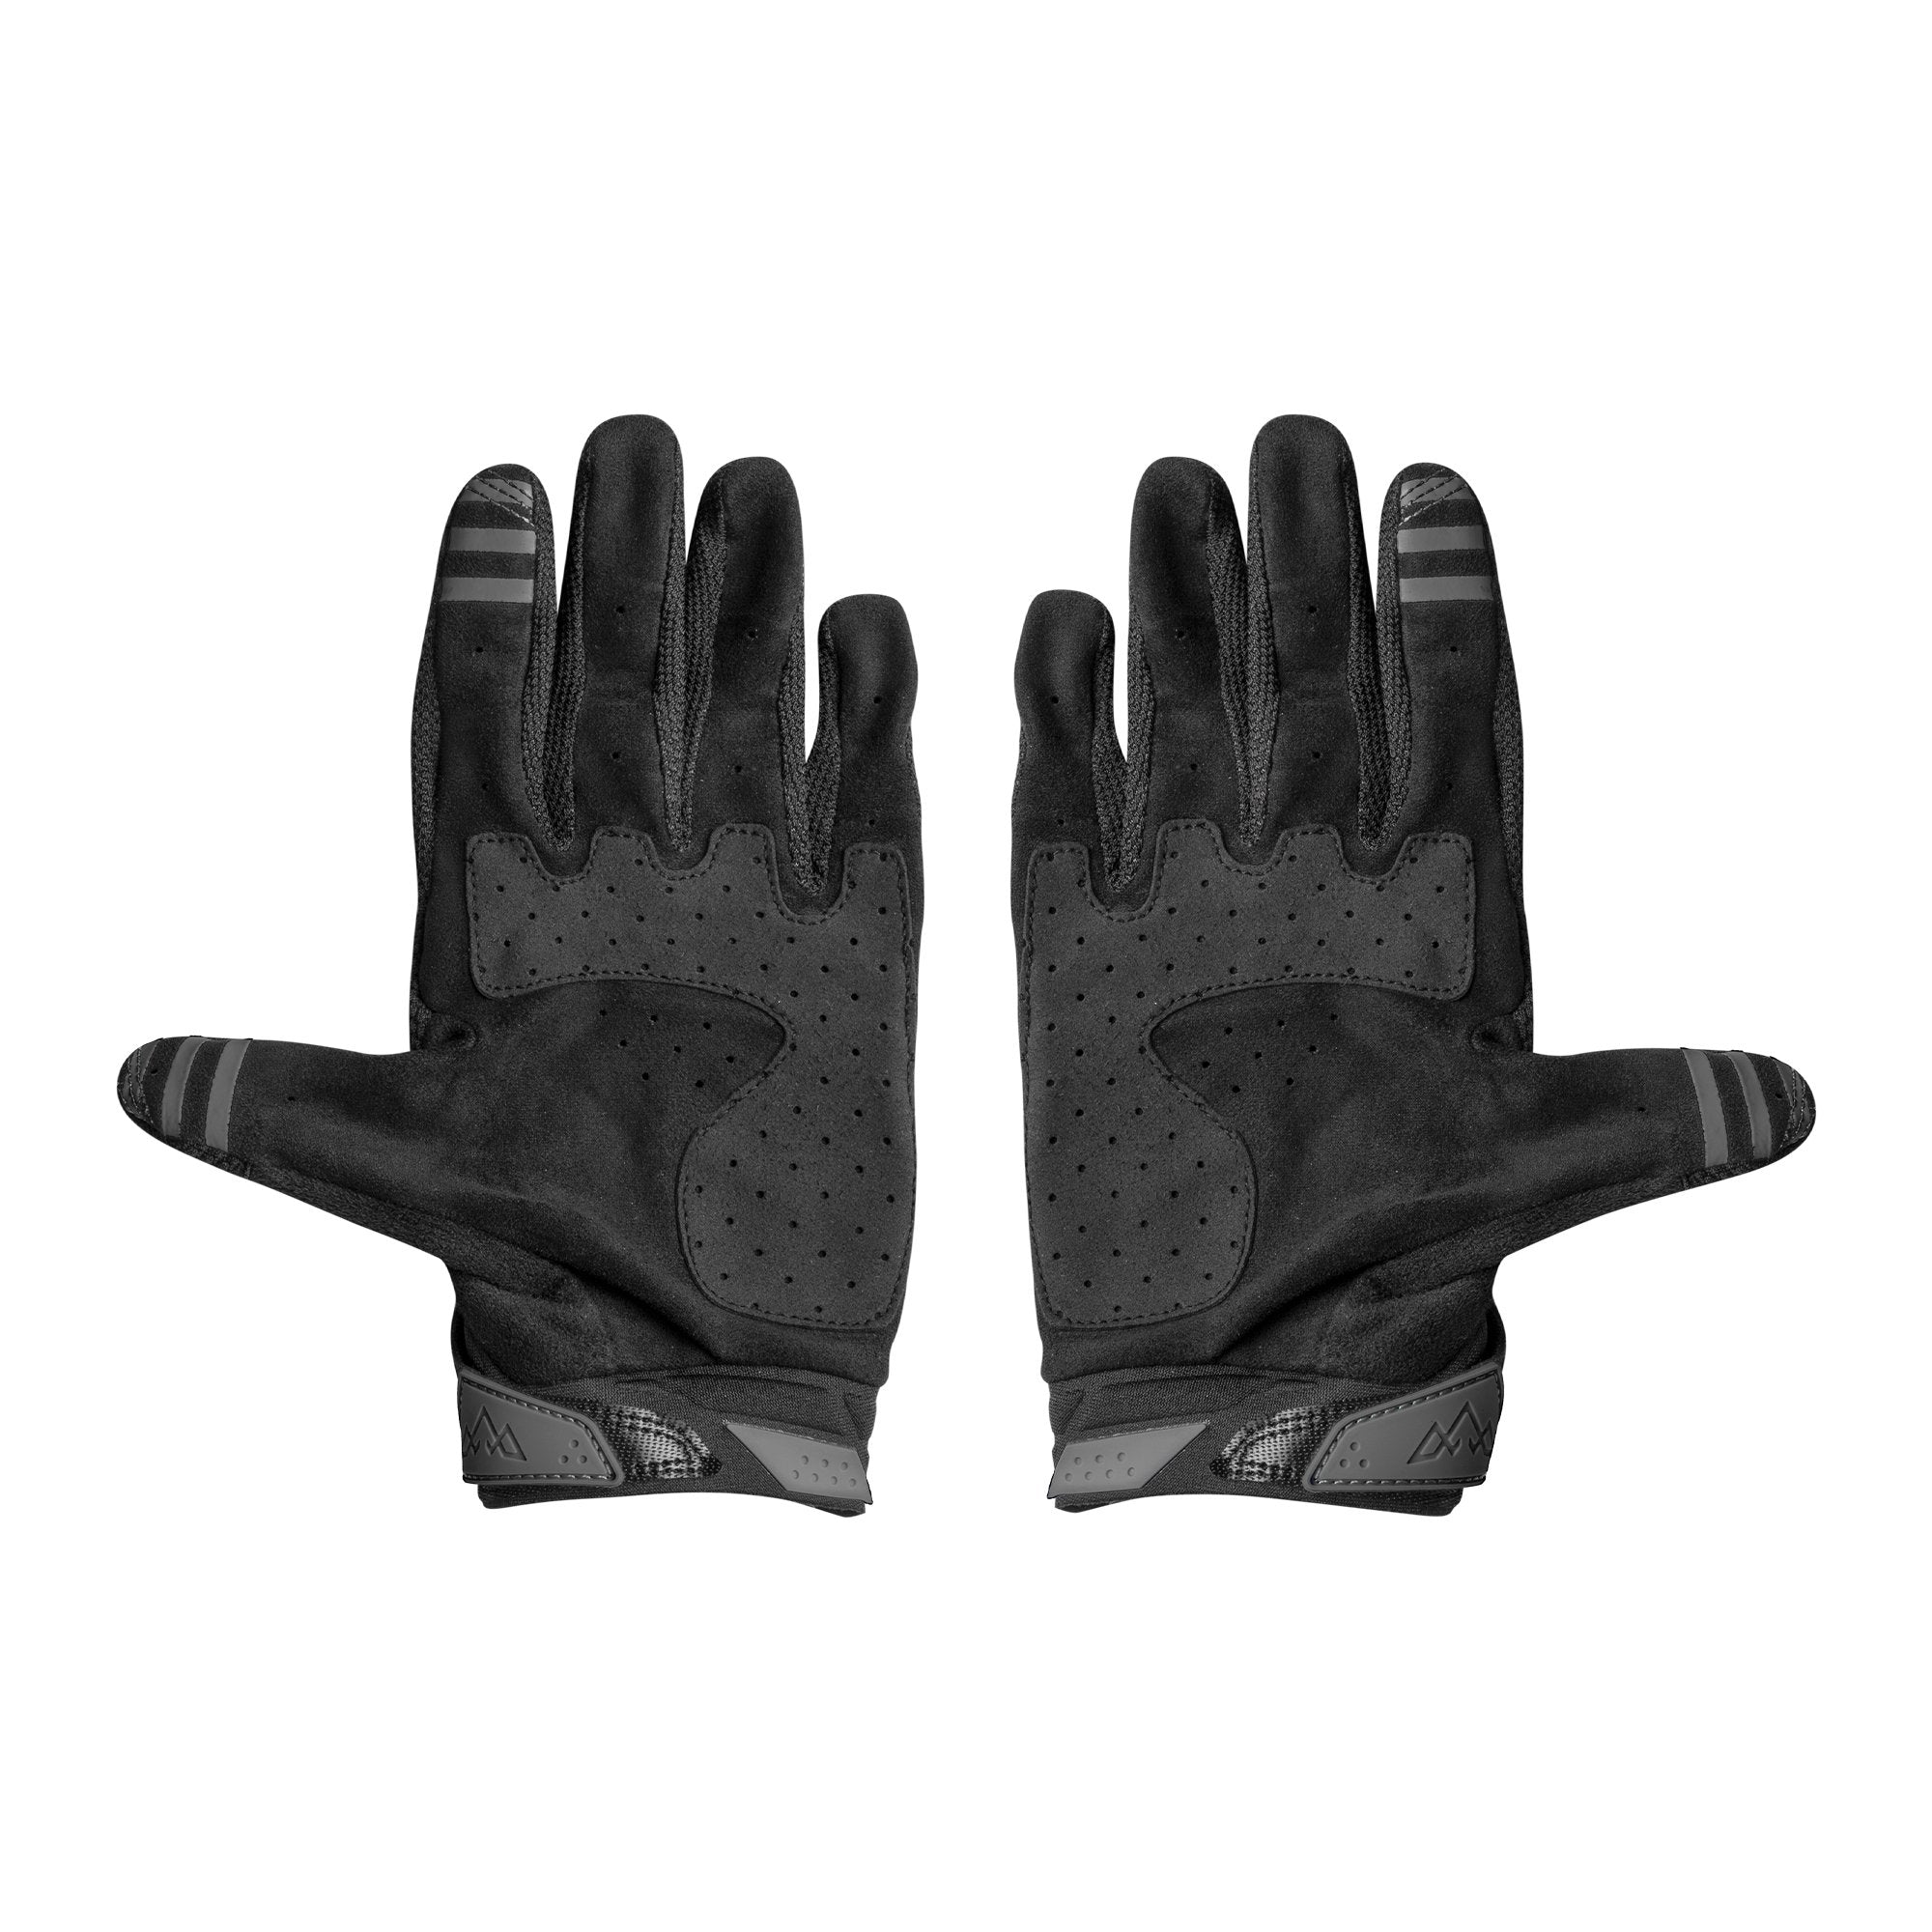 Pathfinder MTB Gloves - Sage (Size XS Only)